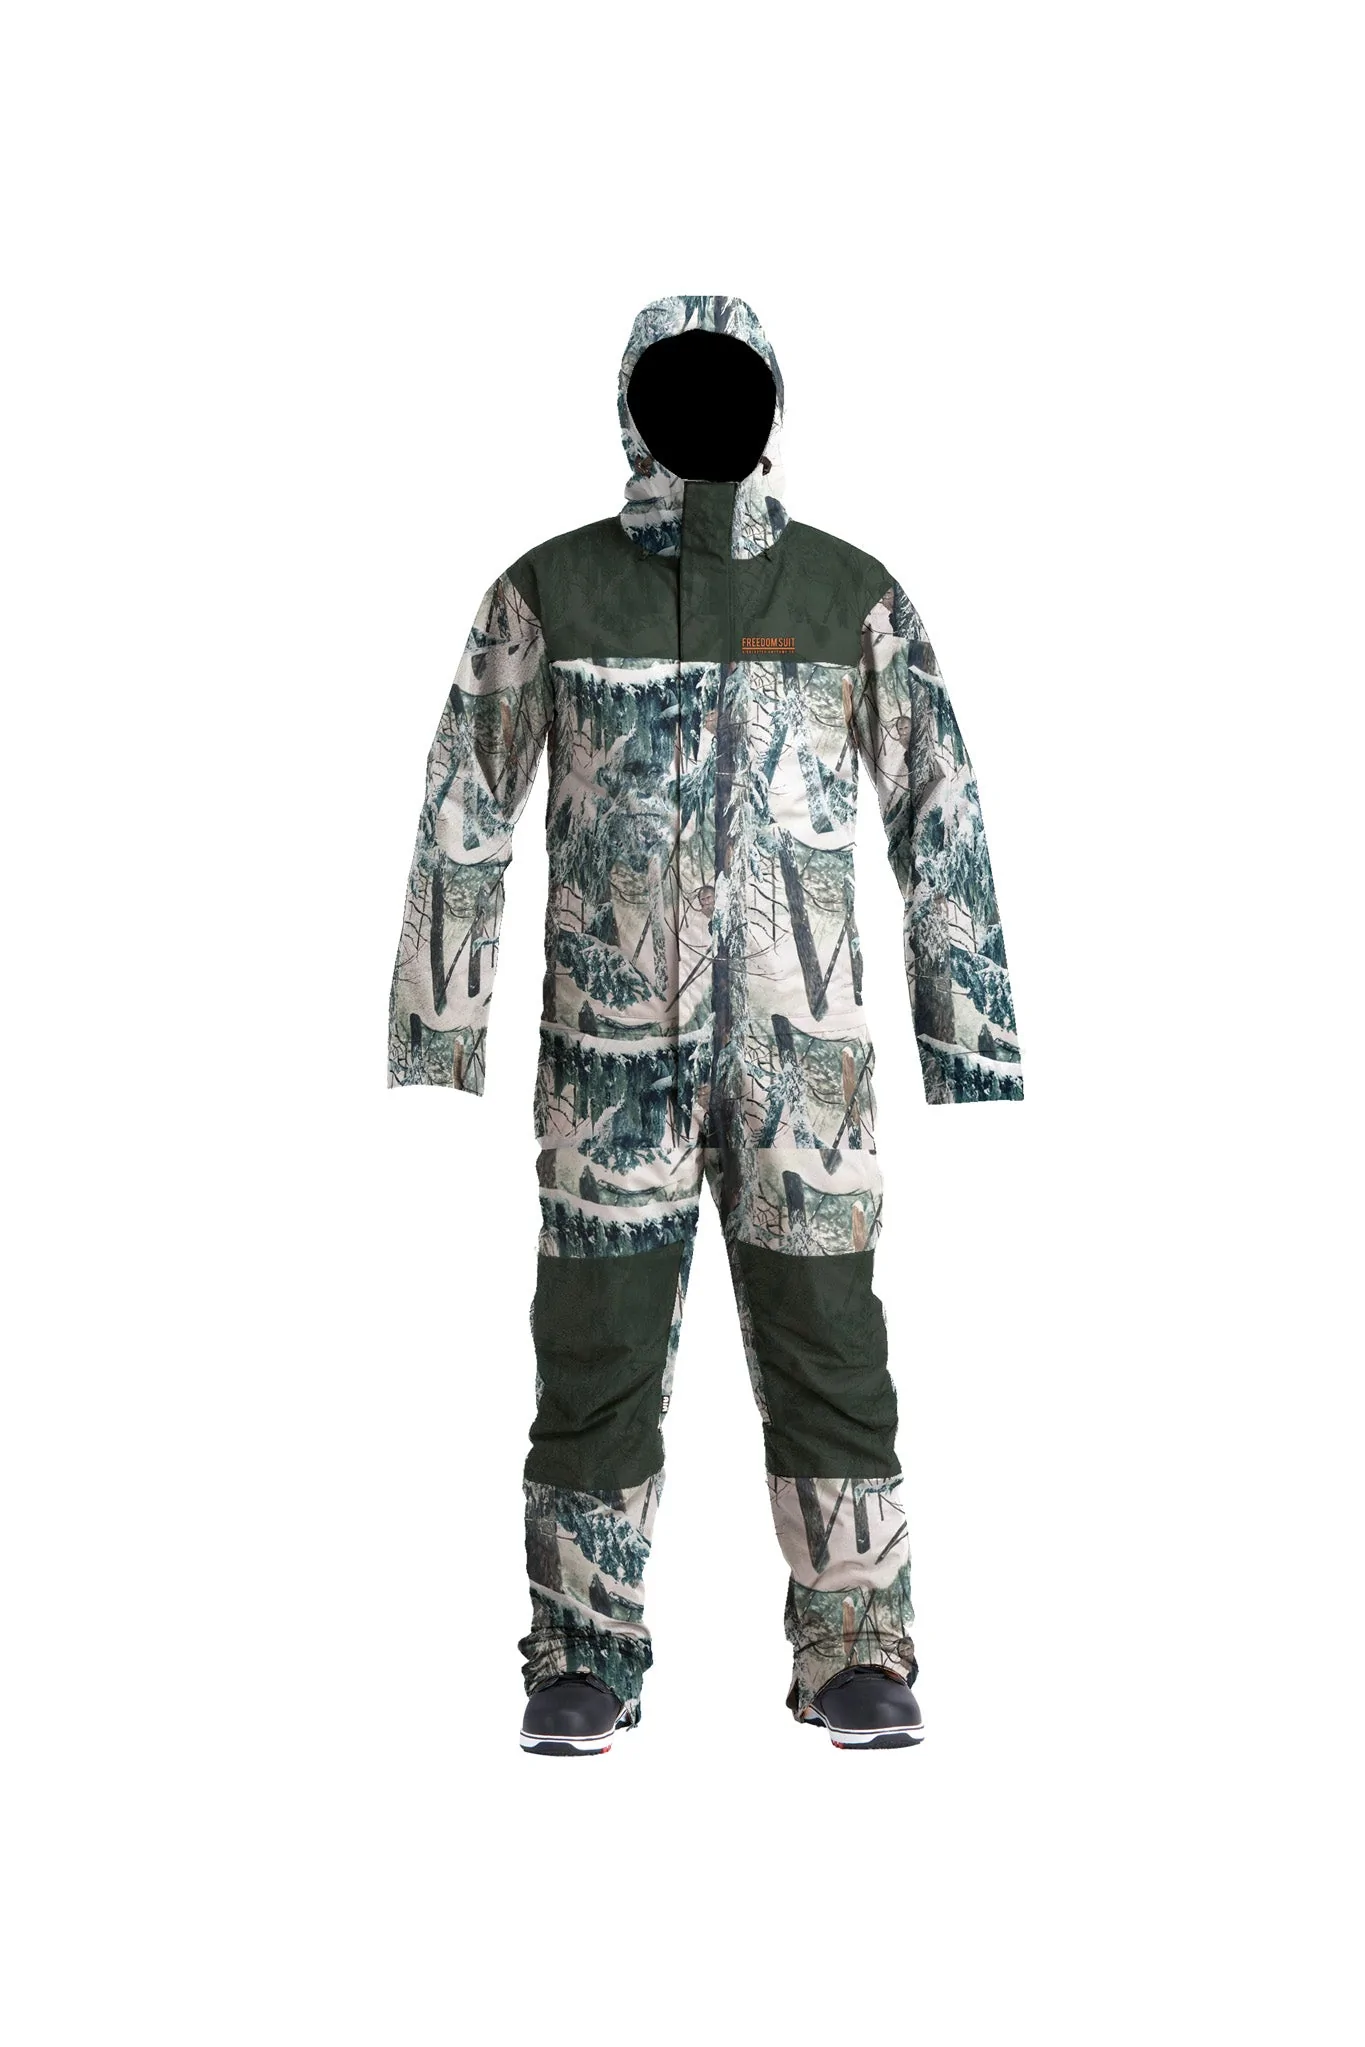 Airblaster insulated Freedom Suit onepiece snowboardpak yetiflage